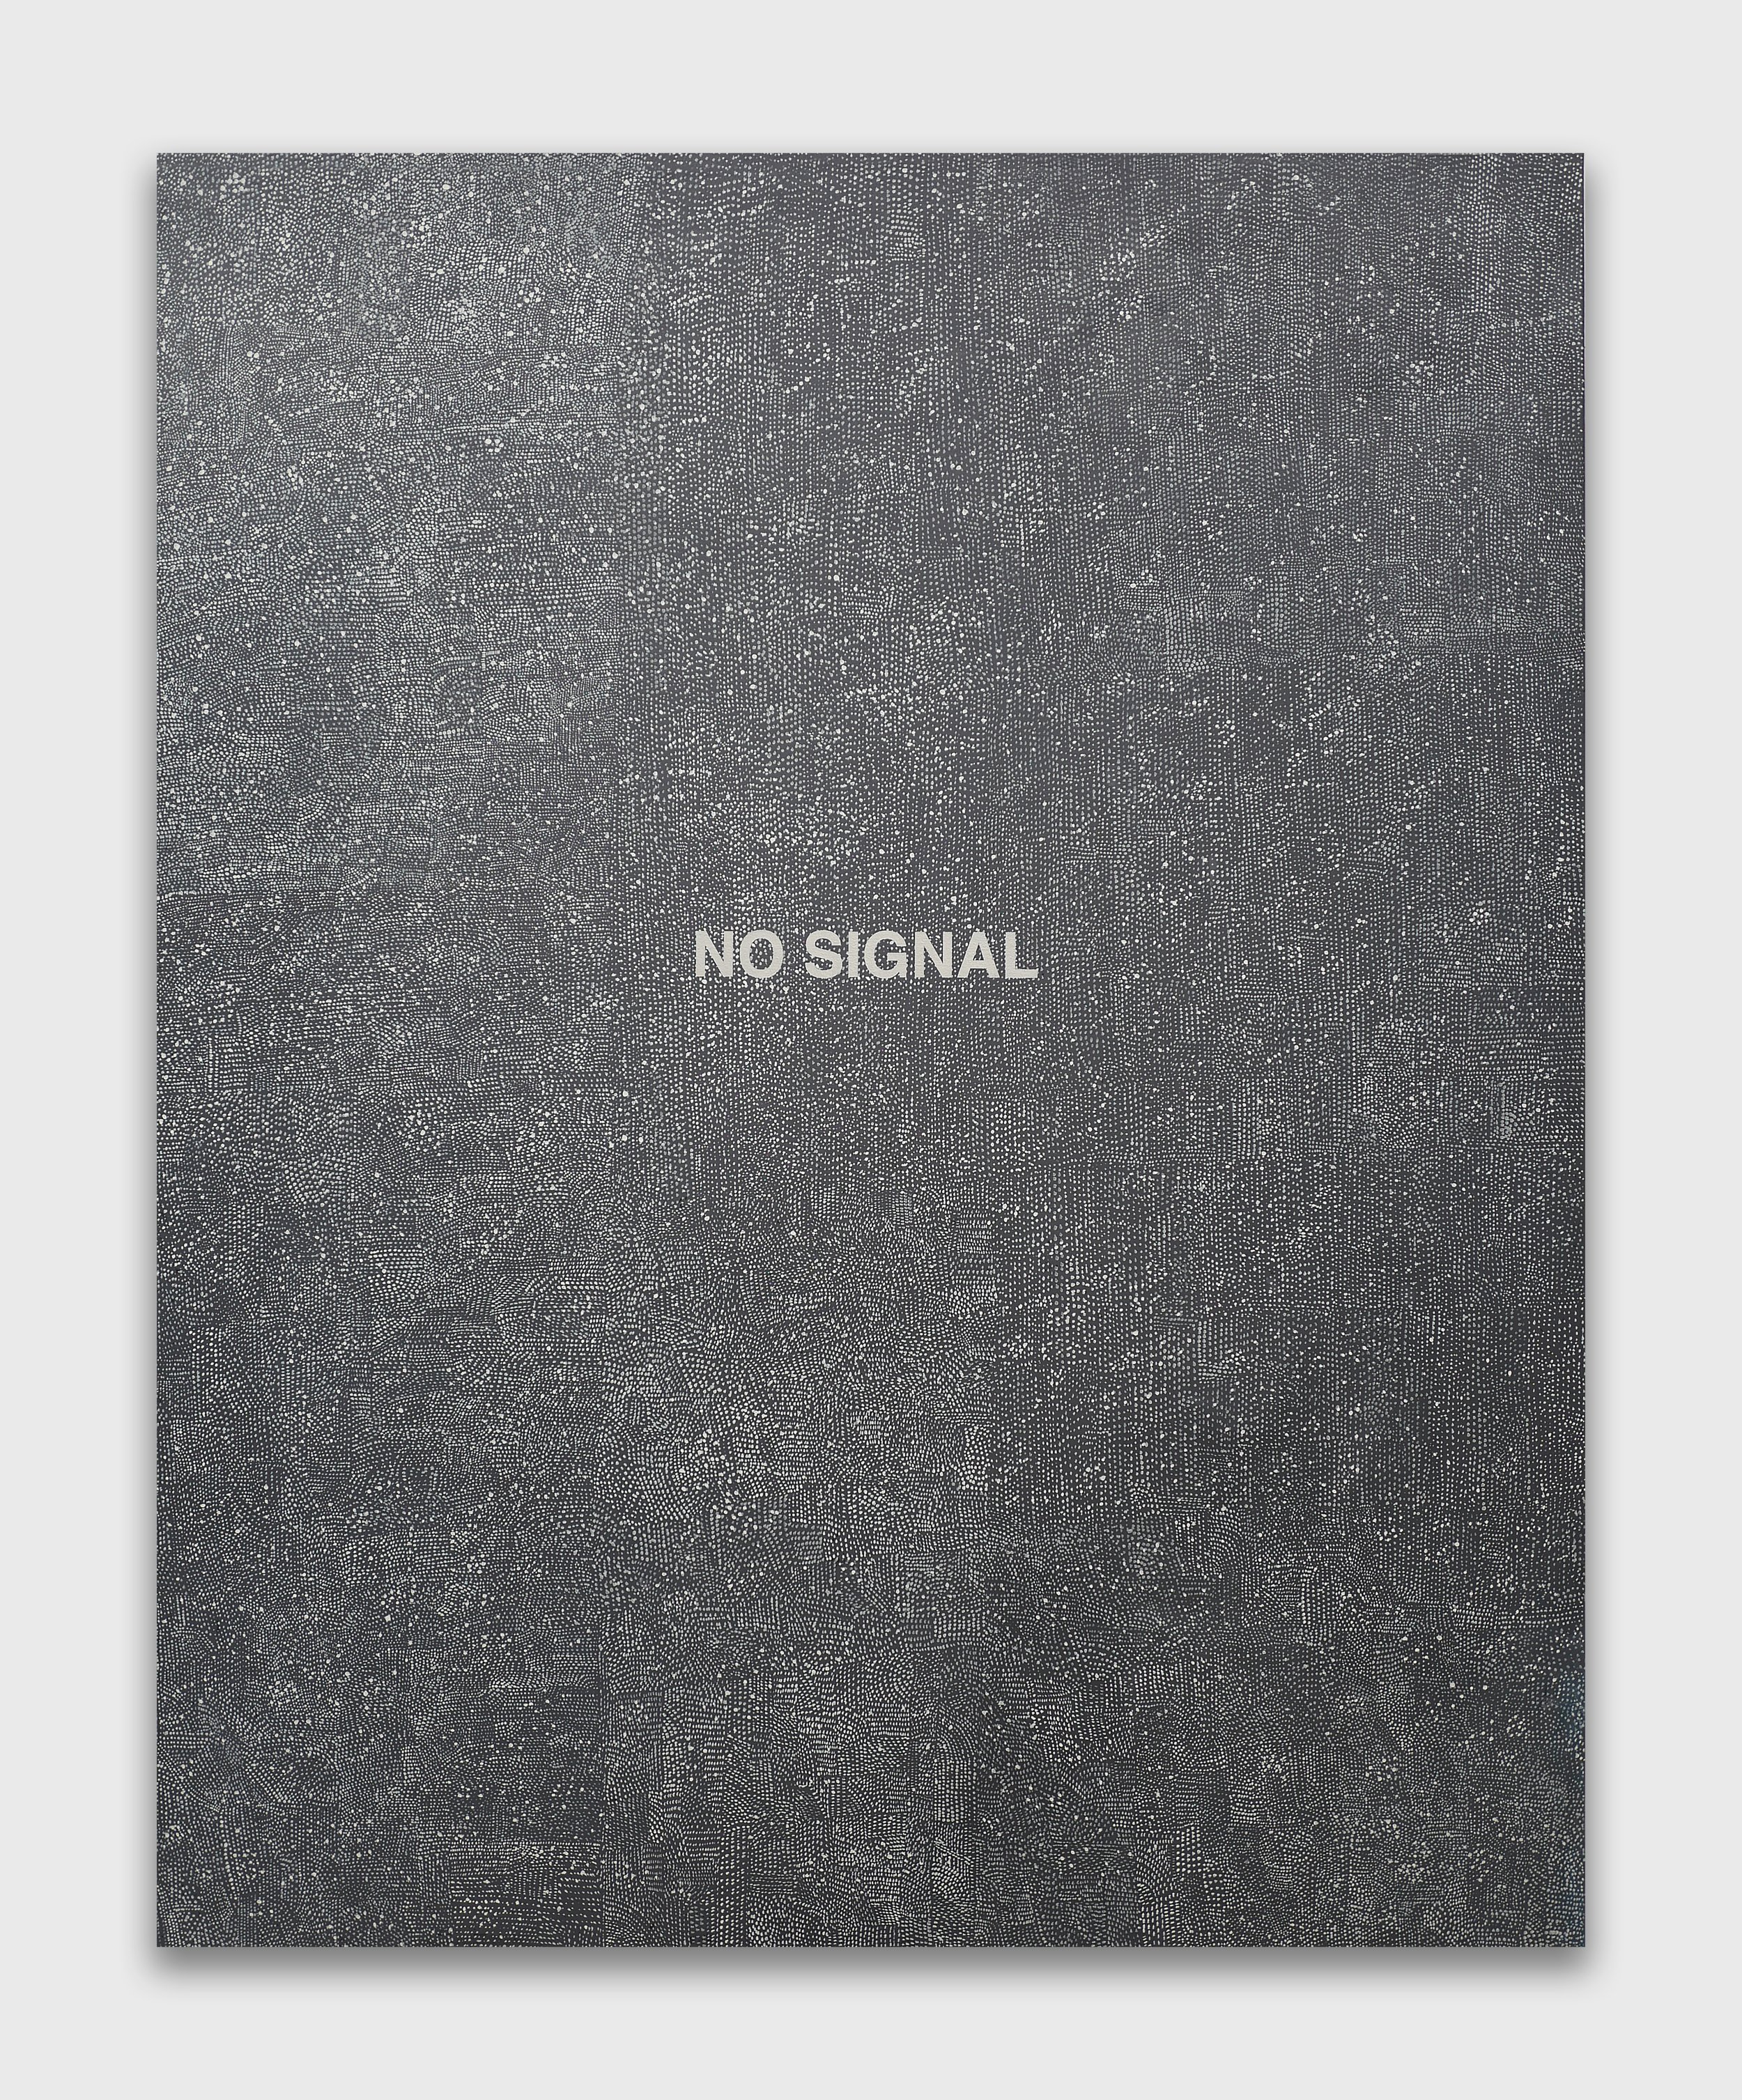   NO SIGNAL,  2019  Oil, acrylic medium on canvas  60 x 48 inches / 152.4 x 121.9 cm   